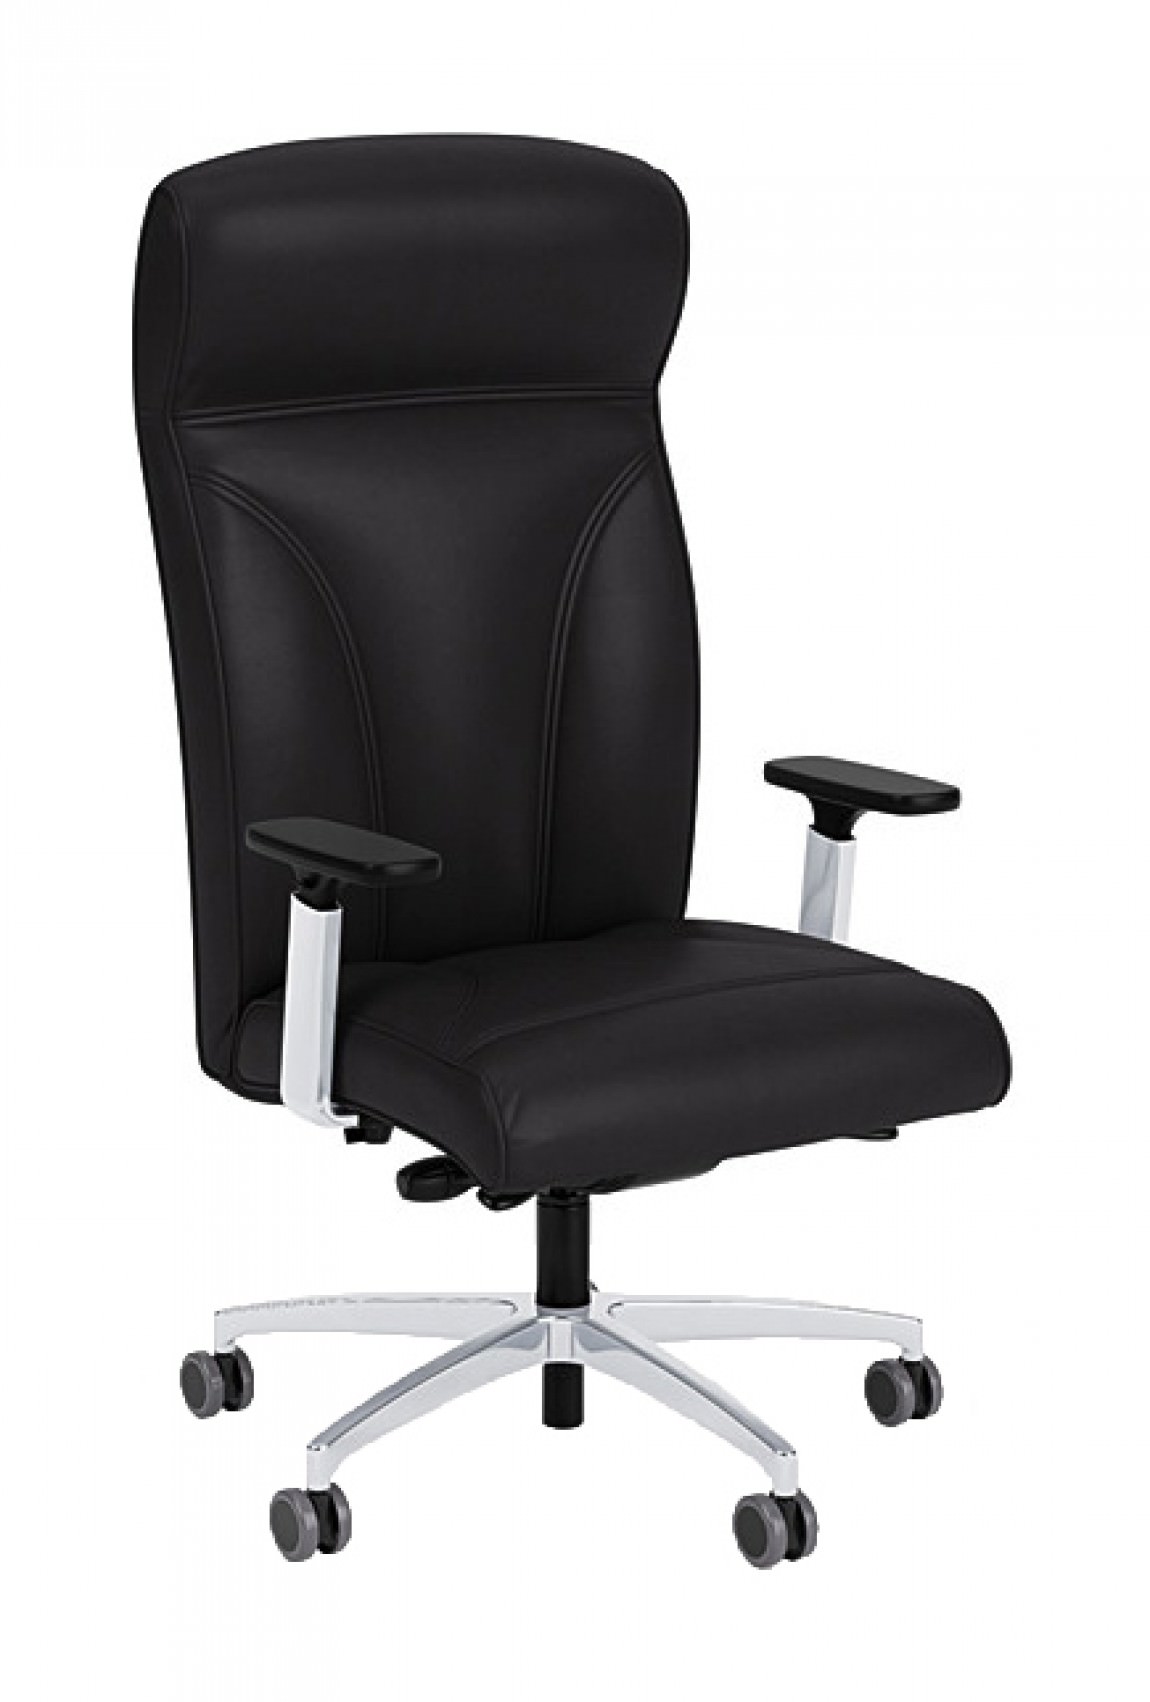 https://madisonliquidators.com/images/p/1150/29680-high-back-ergonomic-chair-1.jpg